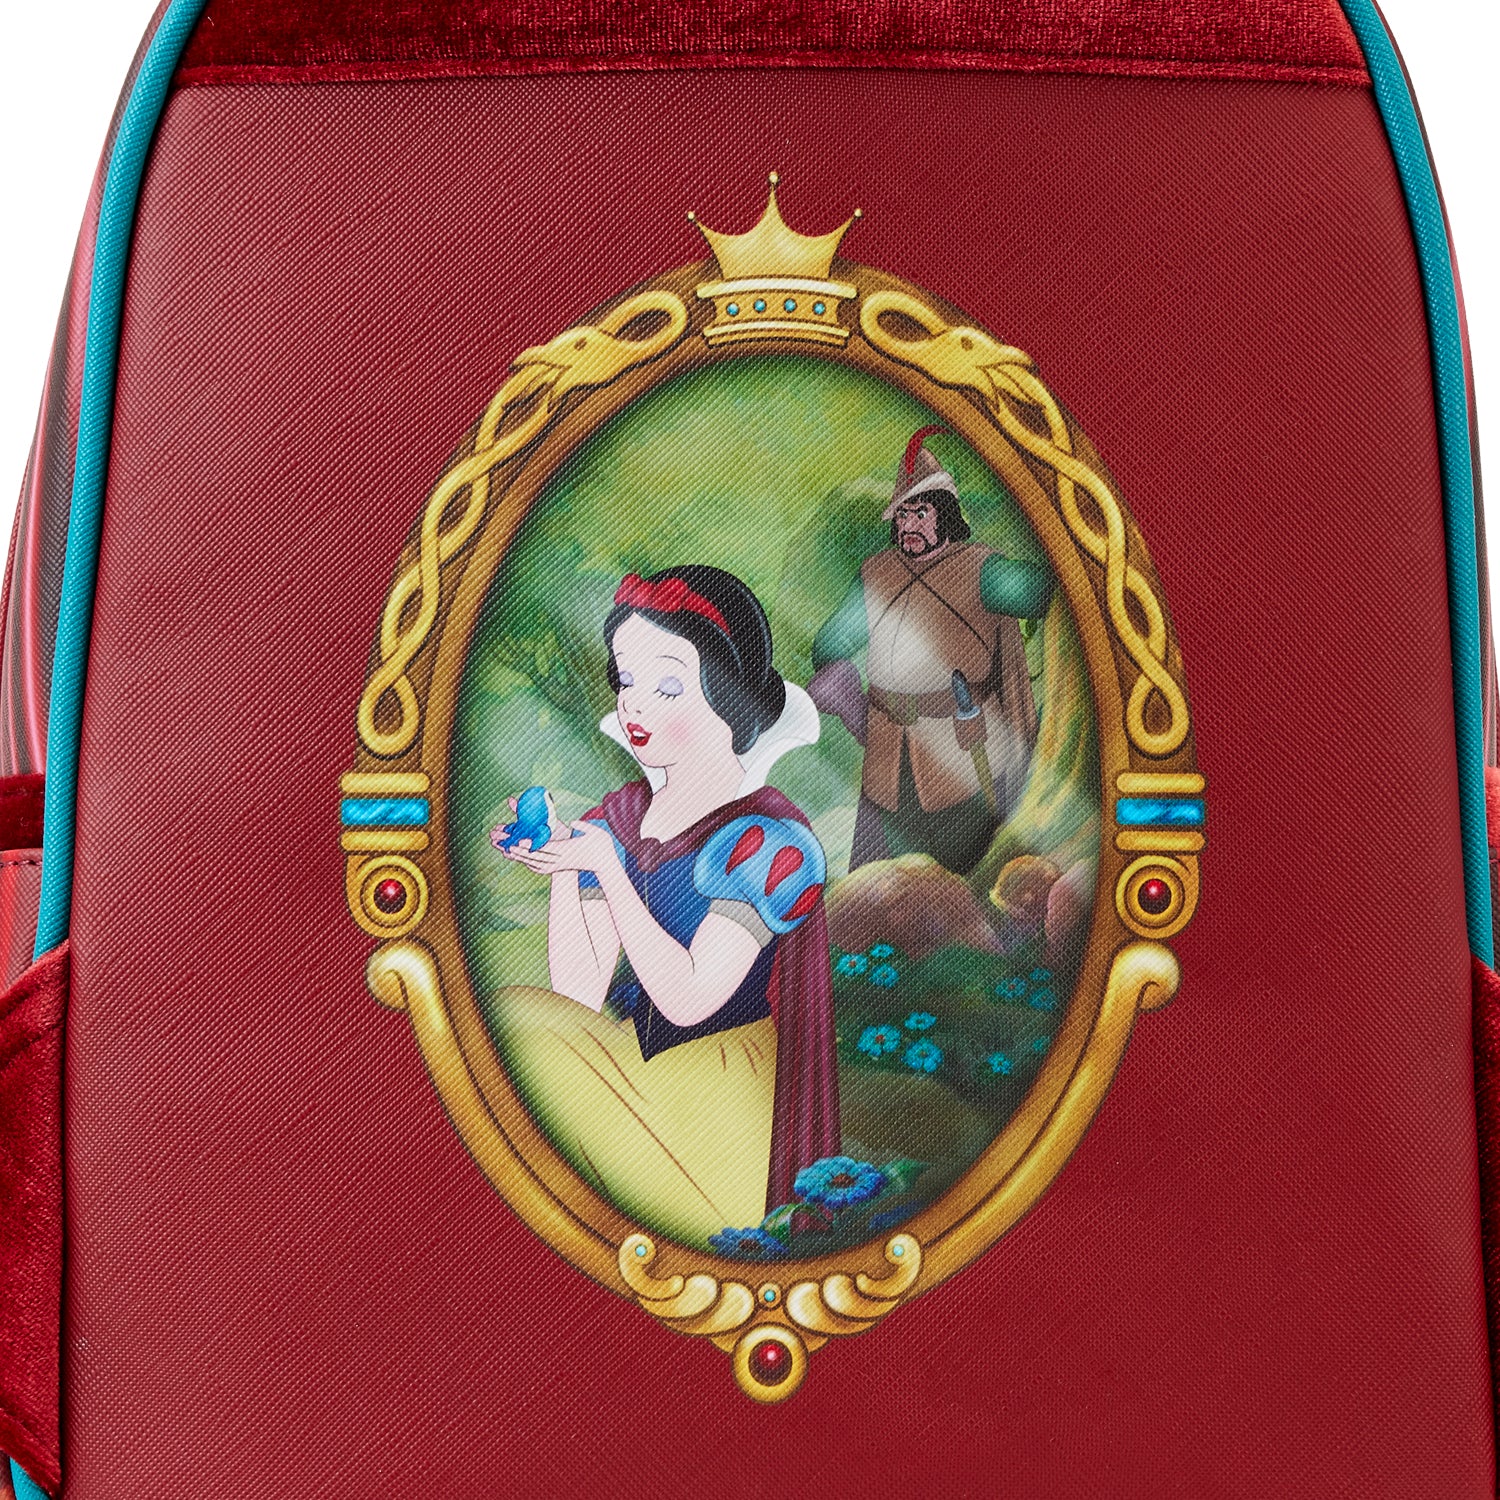 Disney | Snow White Evil Queen Throne Mini Backpack